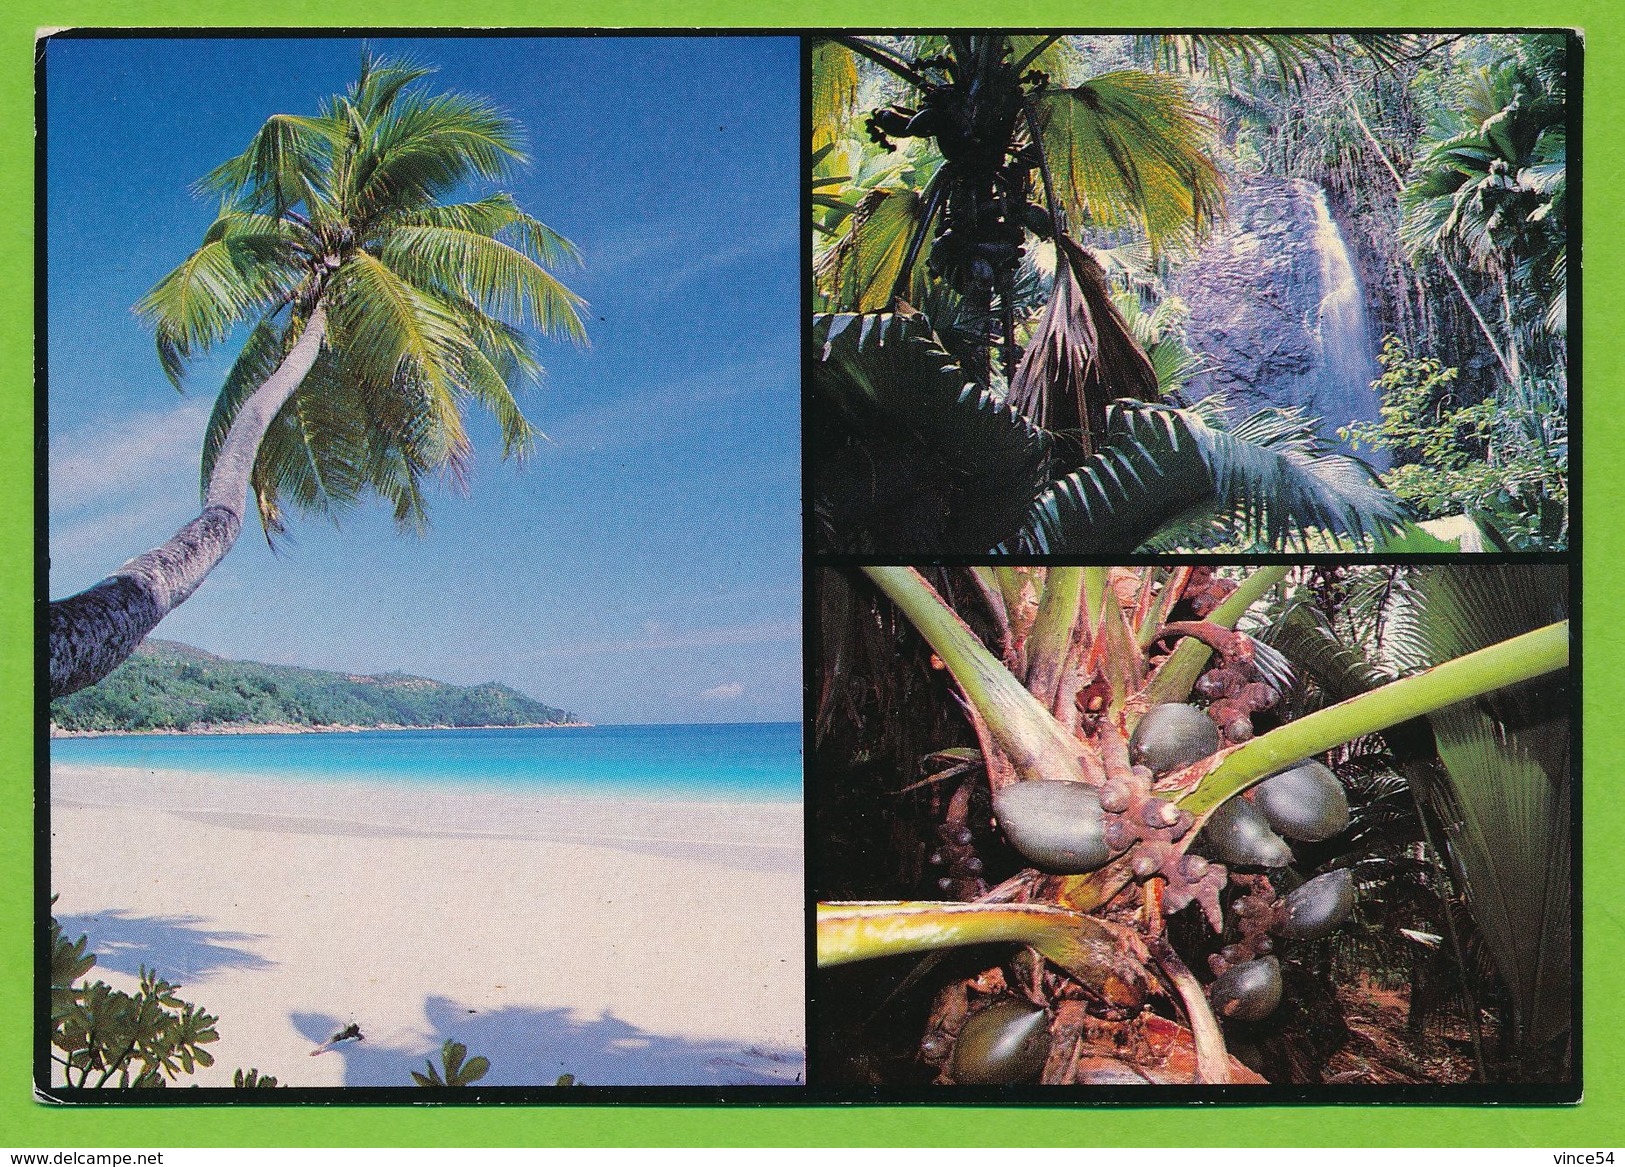 SEYCHELLES - Anse Intendance Mahe Vallée De Mai Praslin Coco De Mer - Seychelles